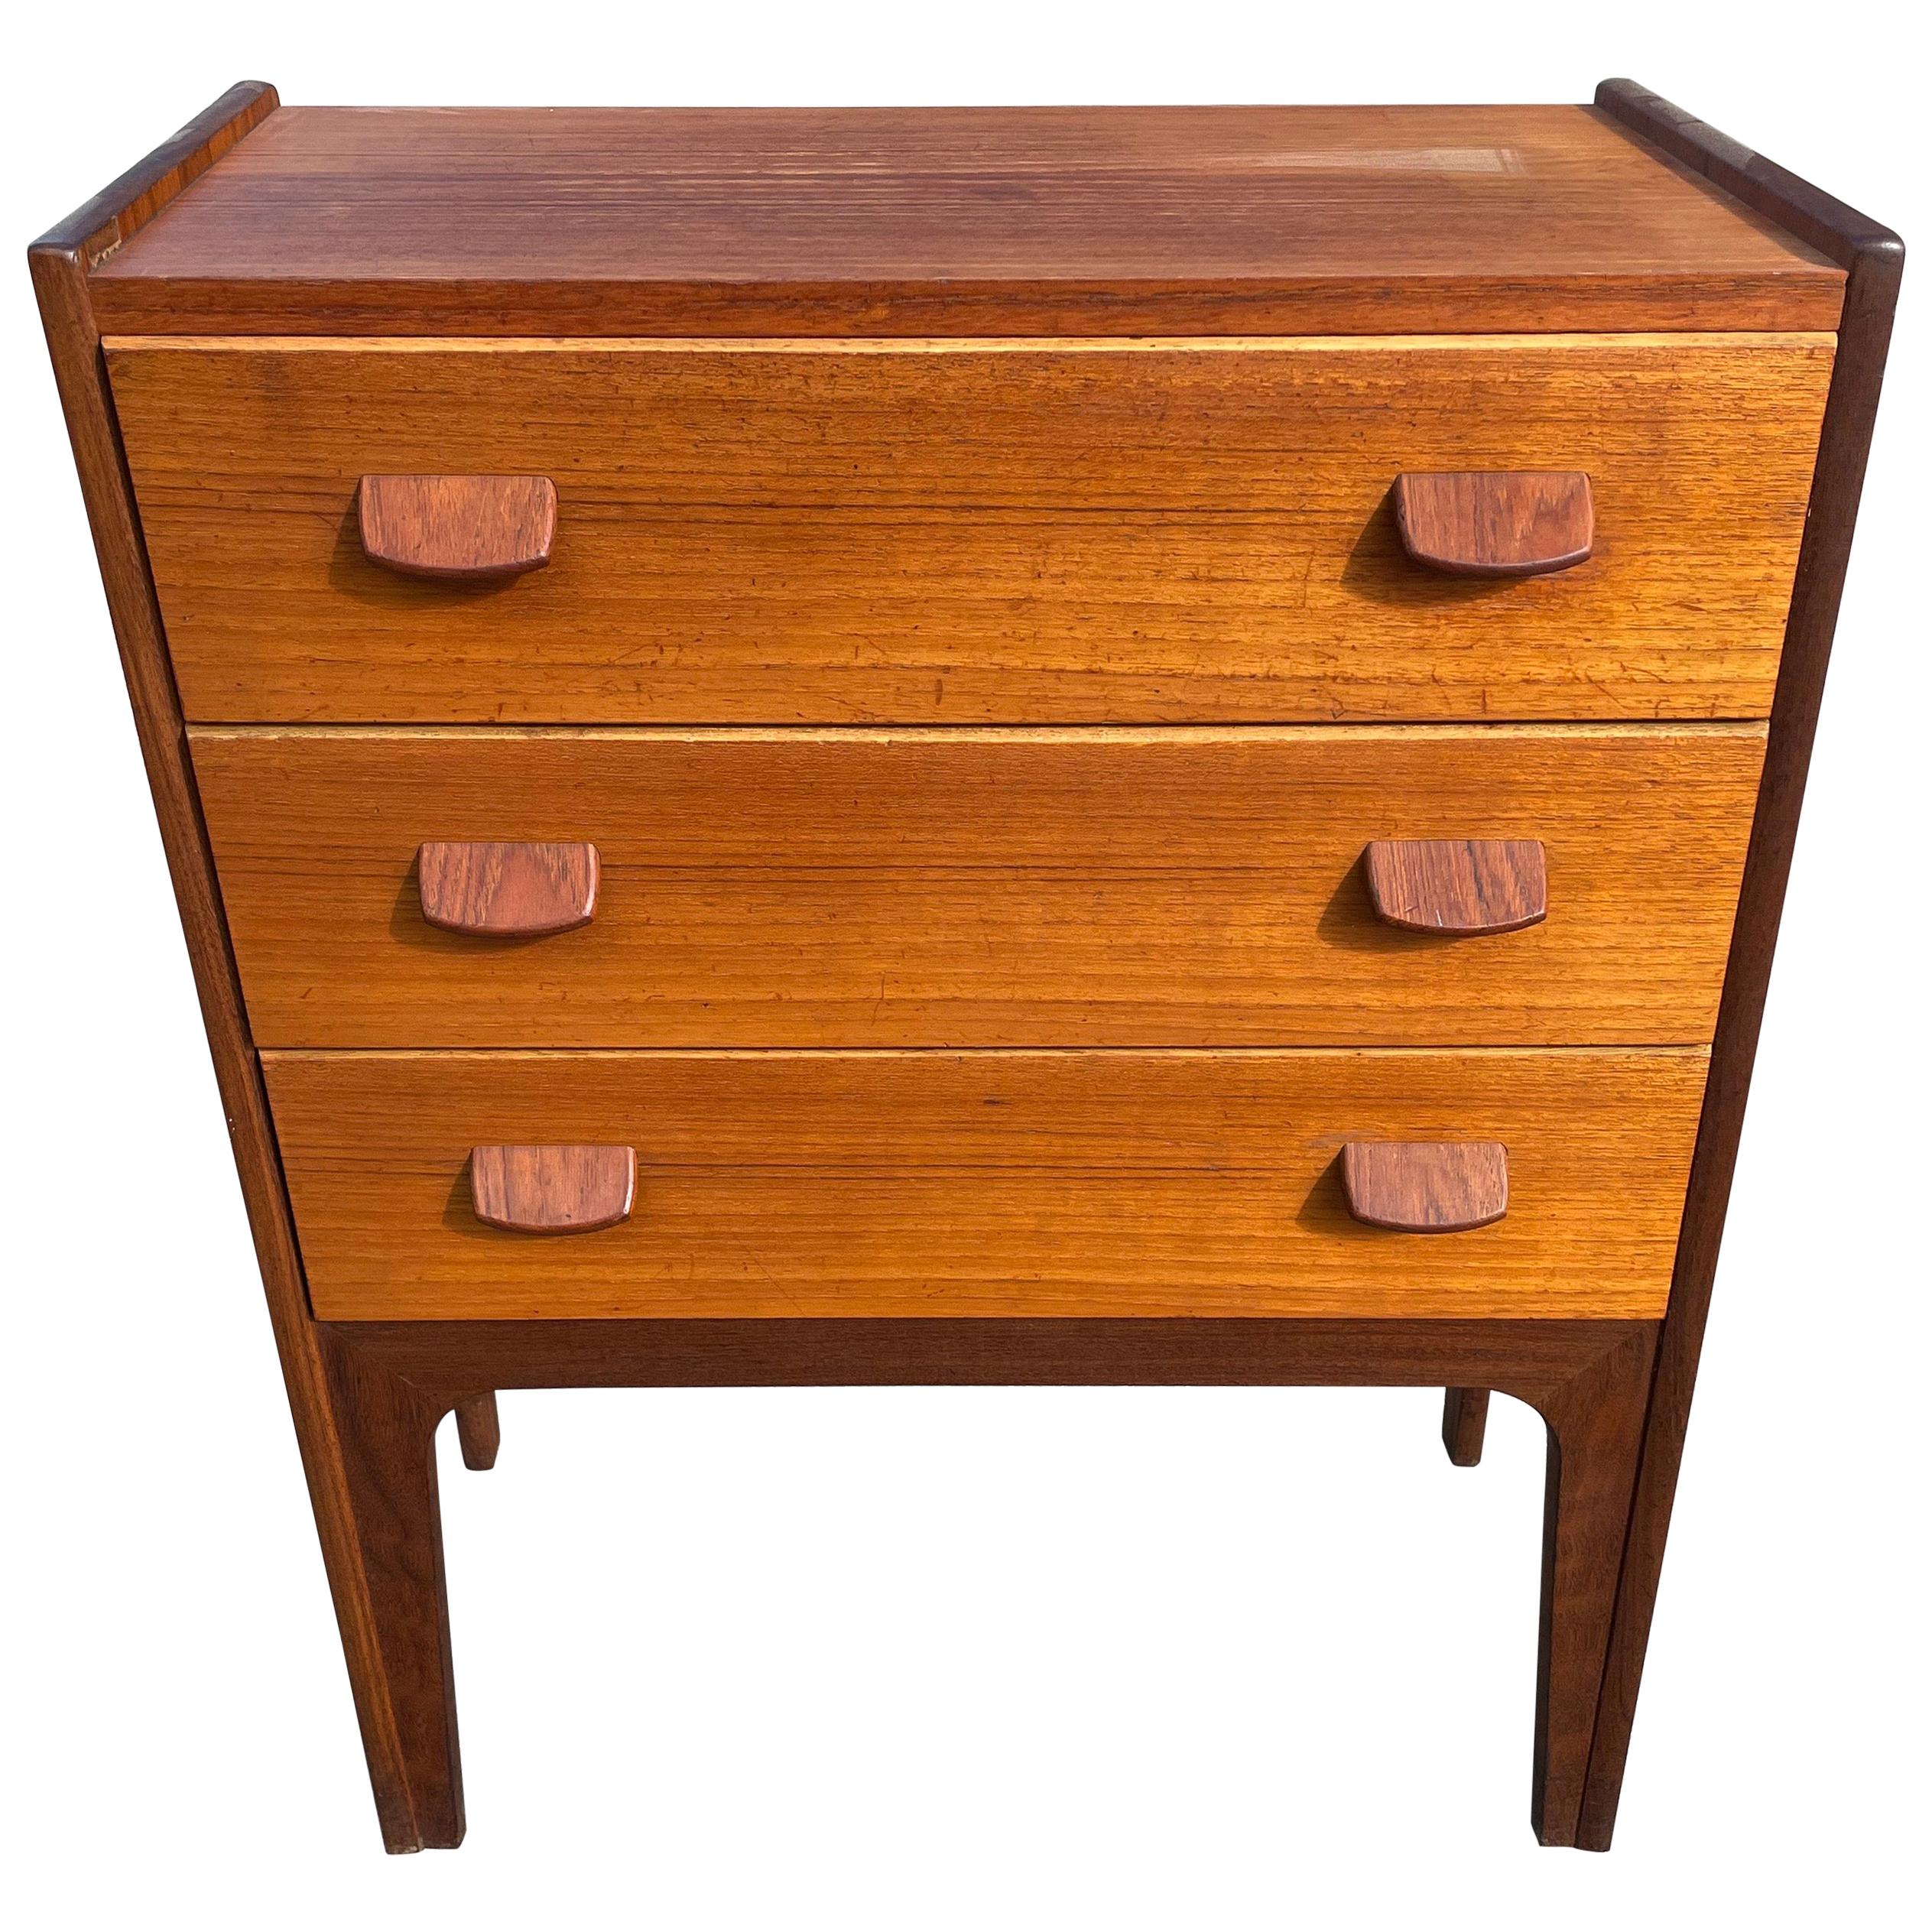 Beautiful Simple Classic Danish Mid-Century Dresser from 1960s